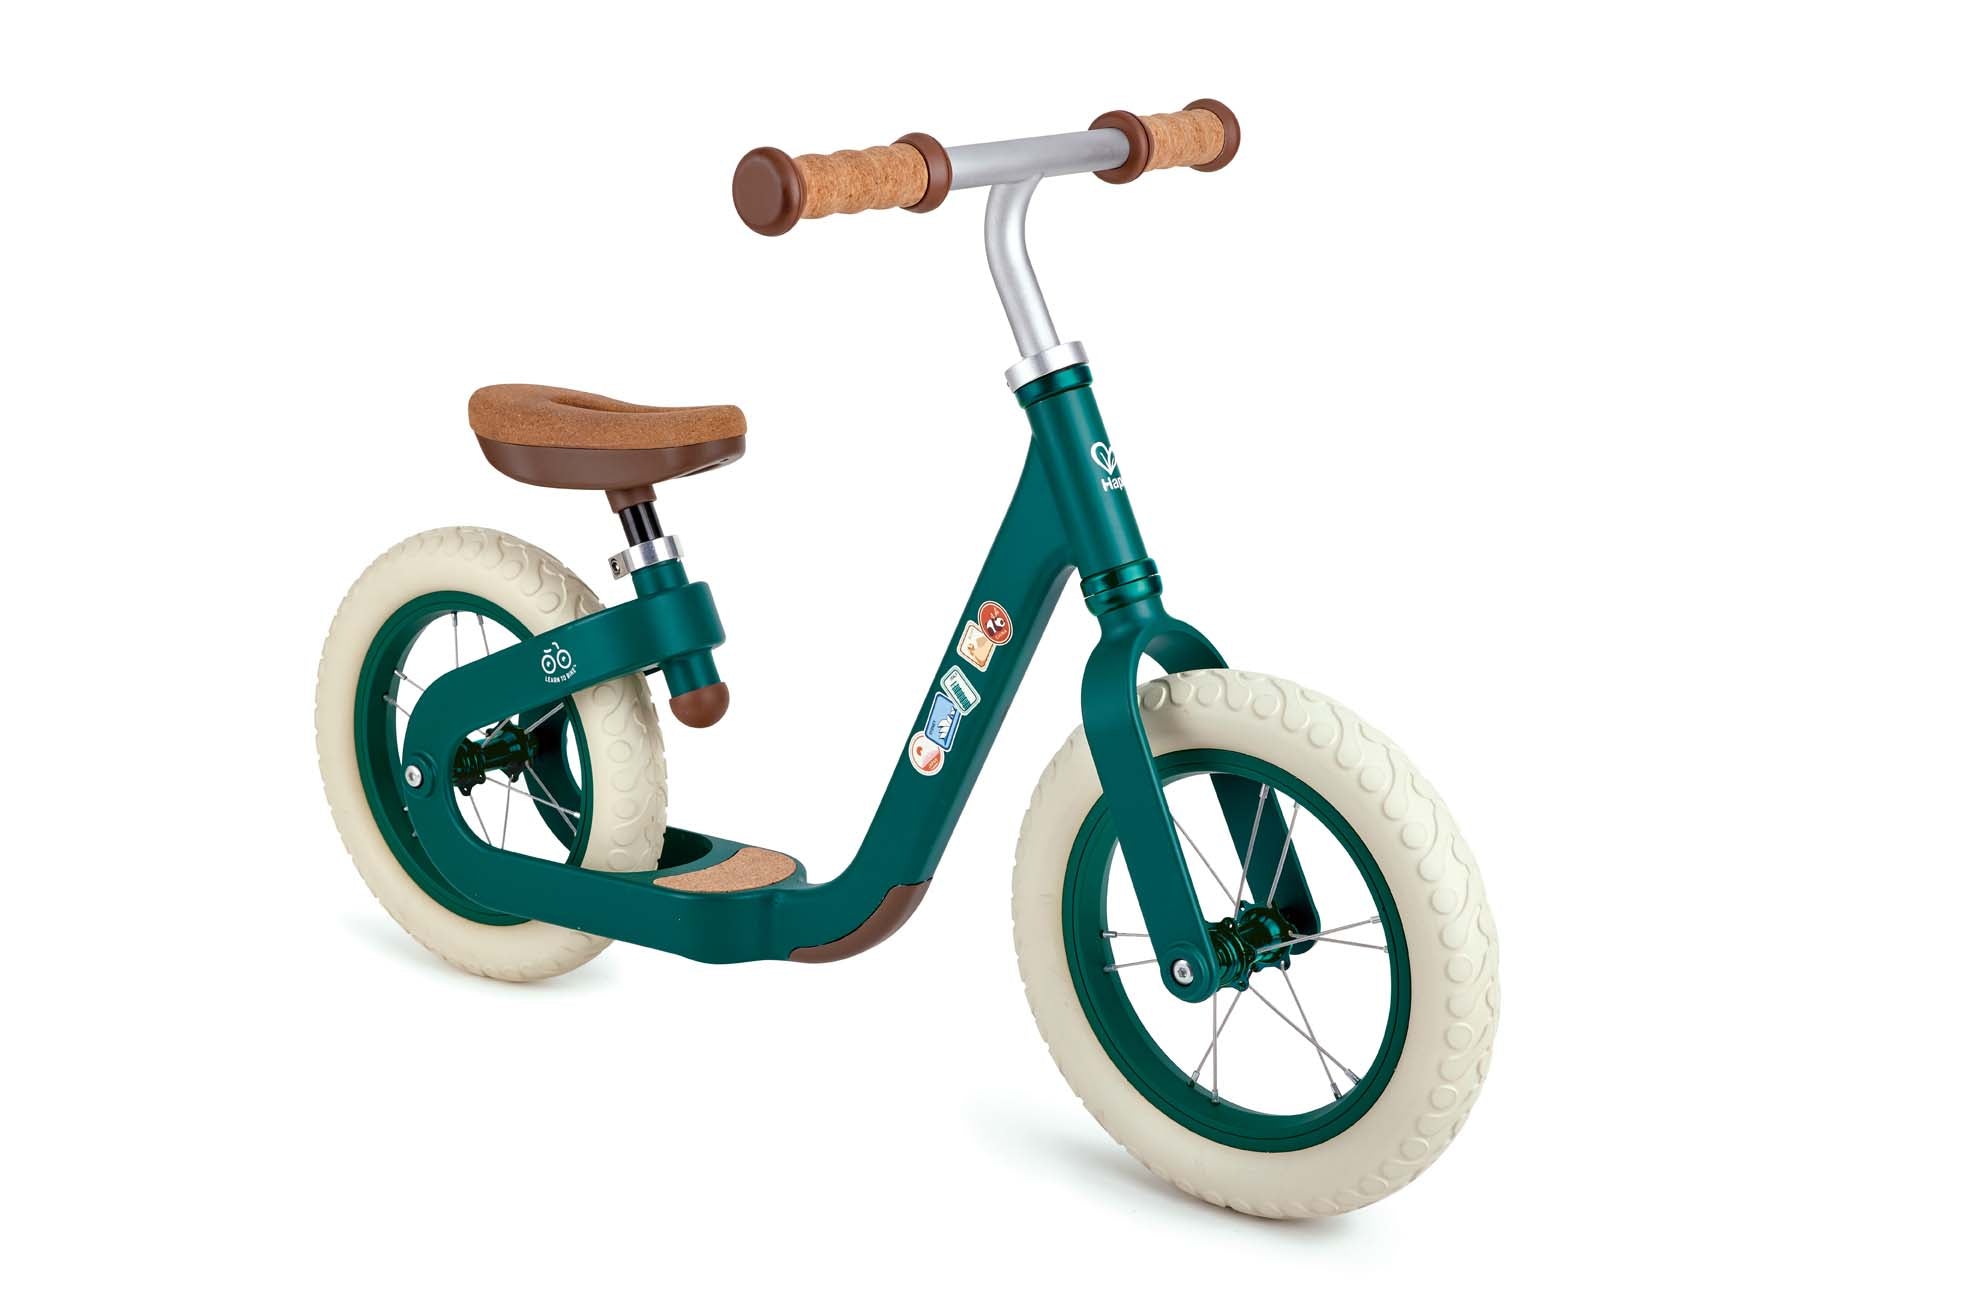 Hape Learn to Ride Balance Bike - Green